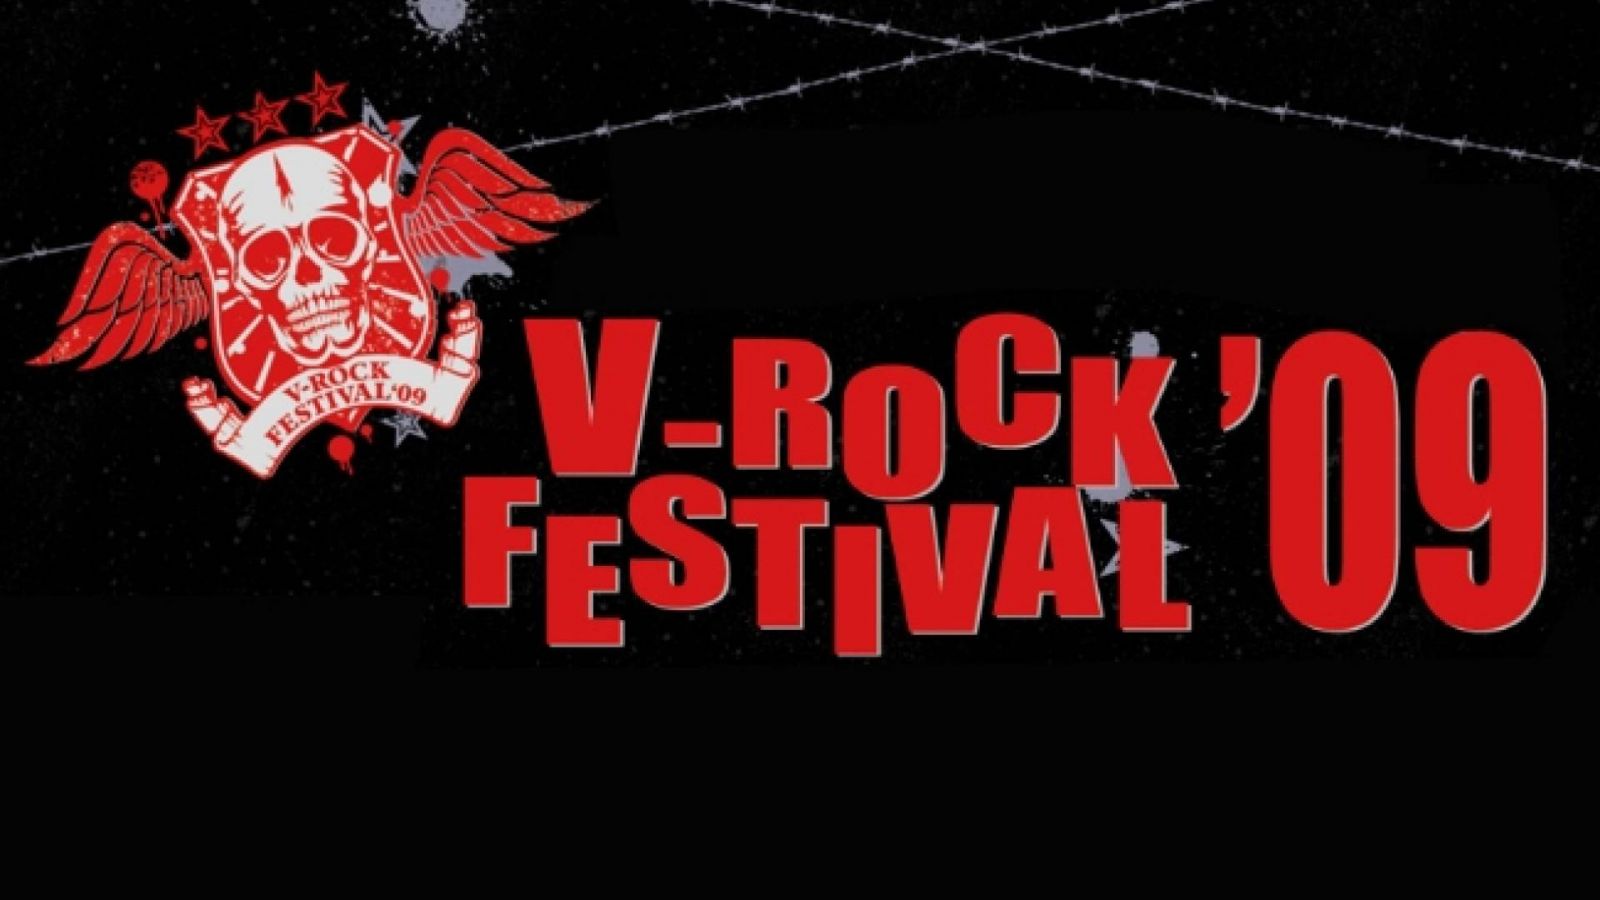 V-ROCK Festival 2009 © Backstage Project